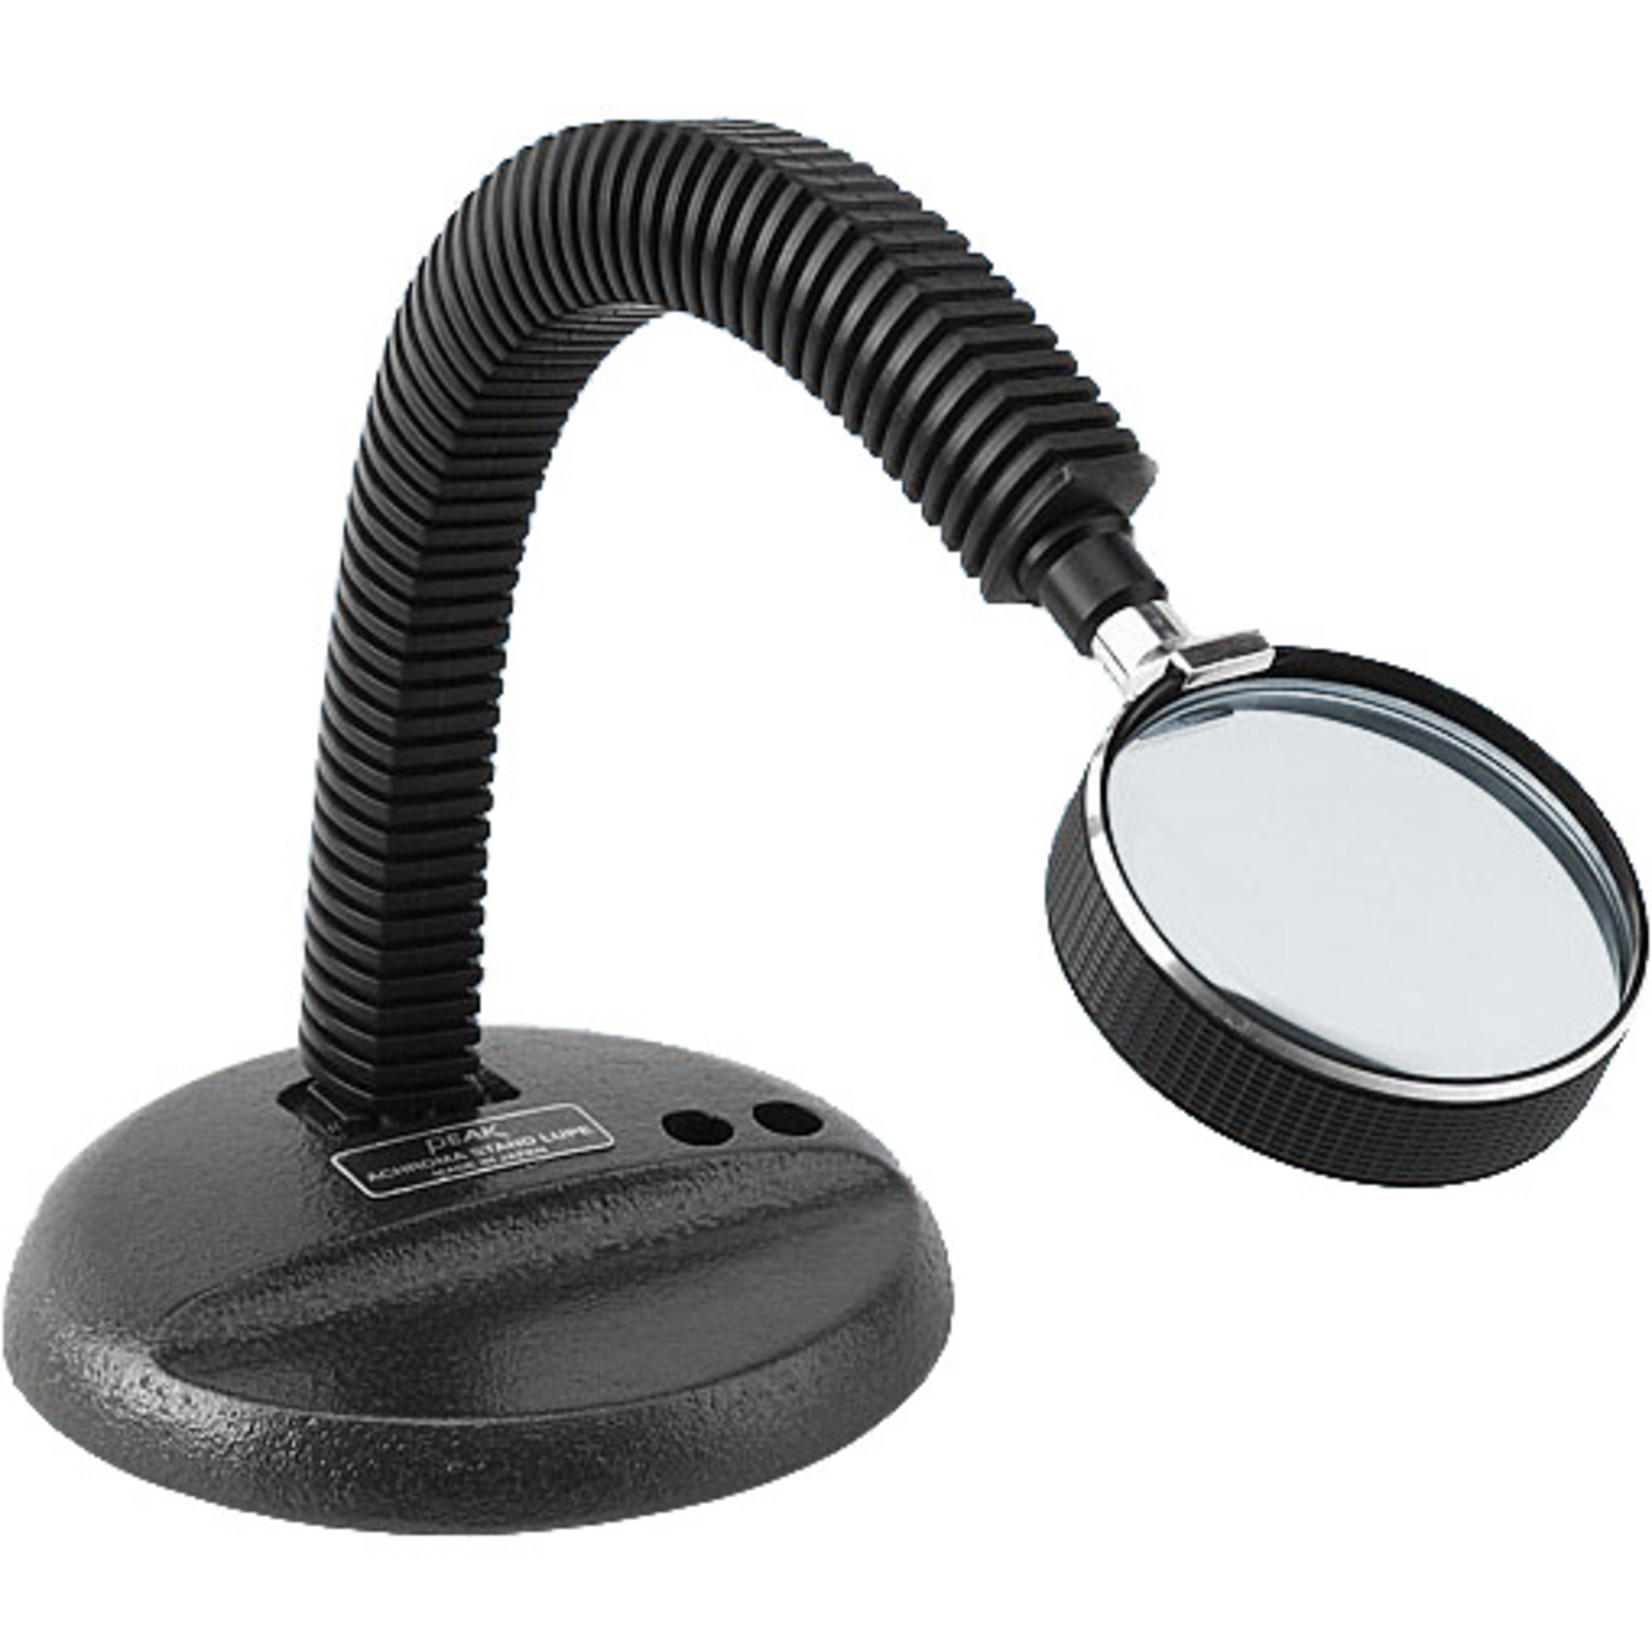 PEAK Working magnifiers 2x to 4x with achromatic optics